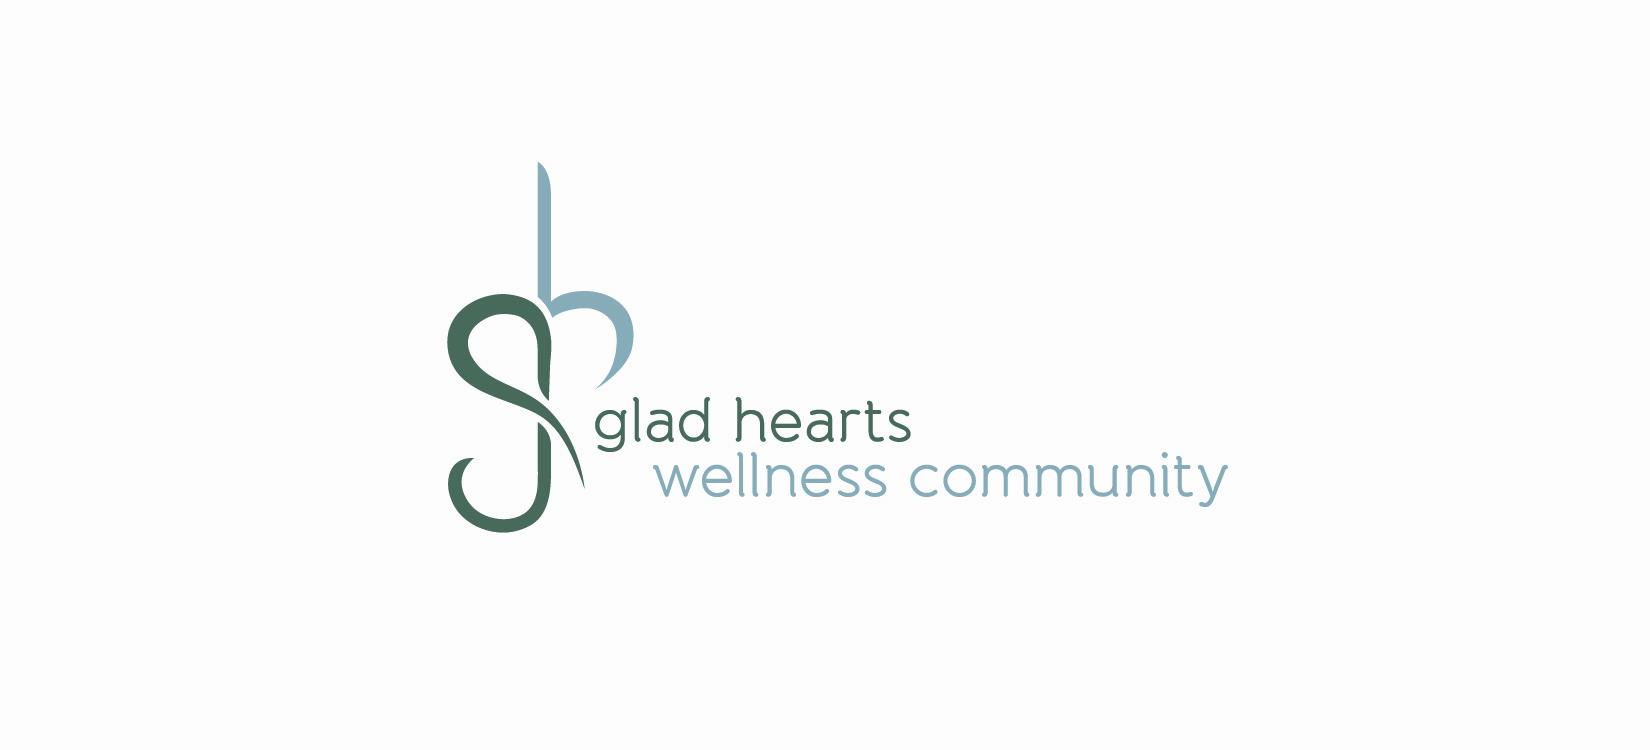 Gladhearts Wellness Community